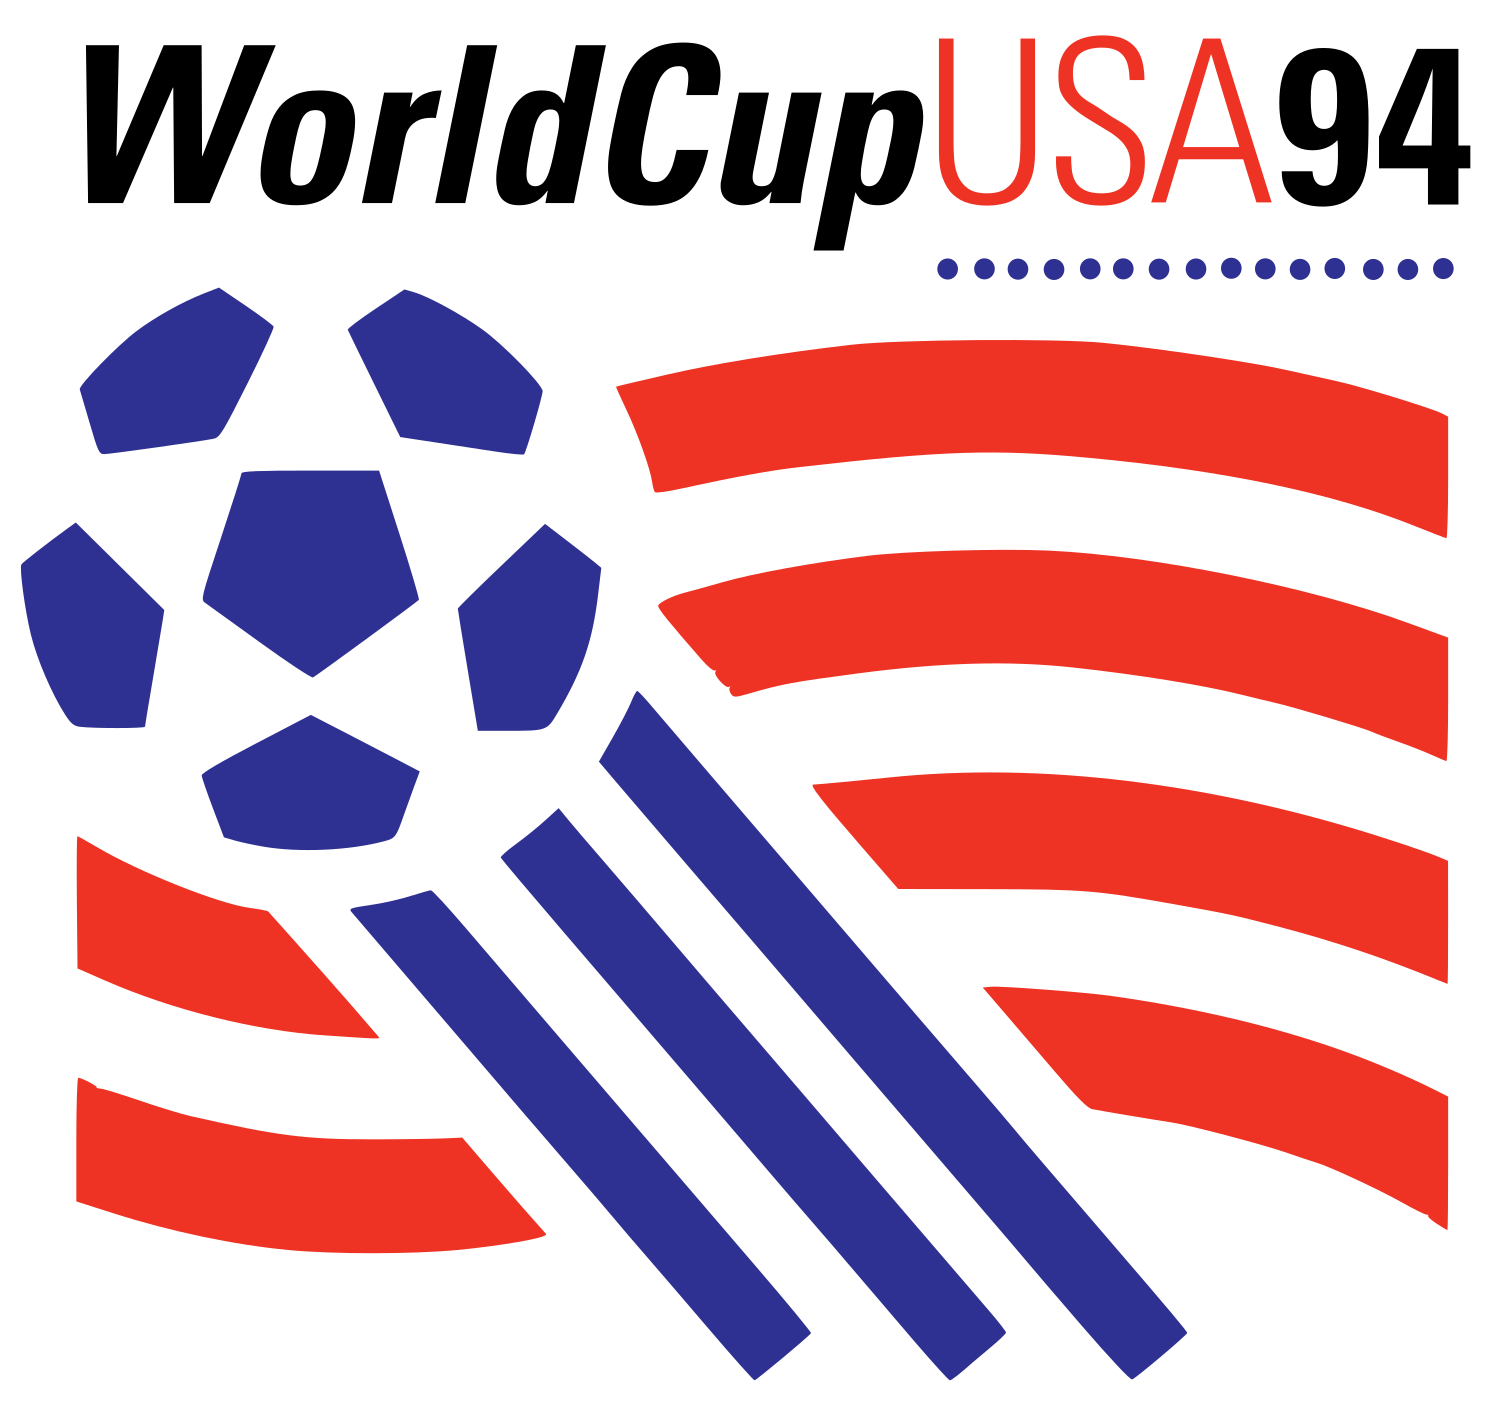 2022 FIFA World Cup - Wikiwand